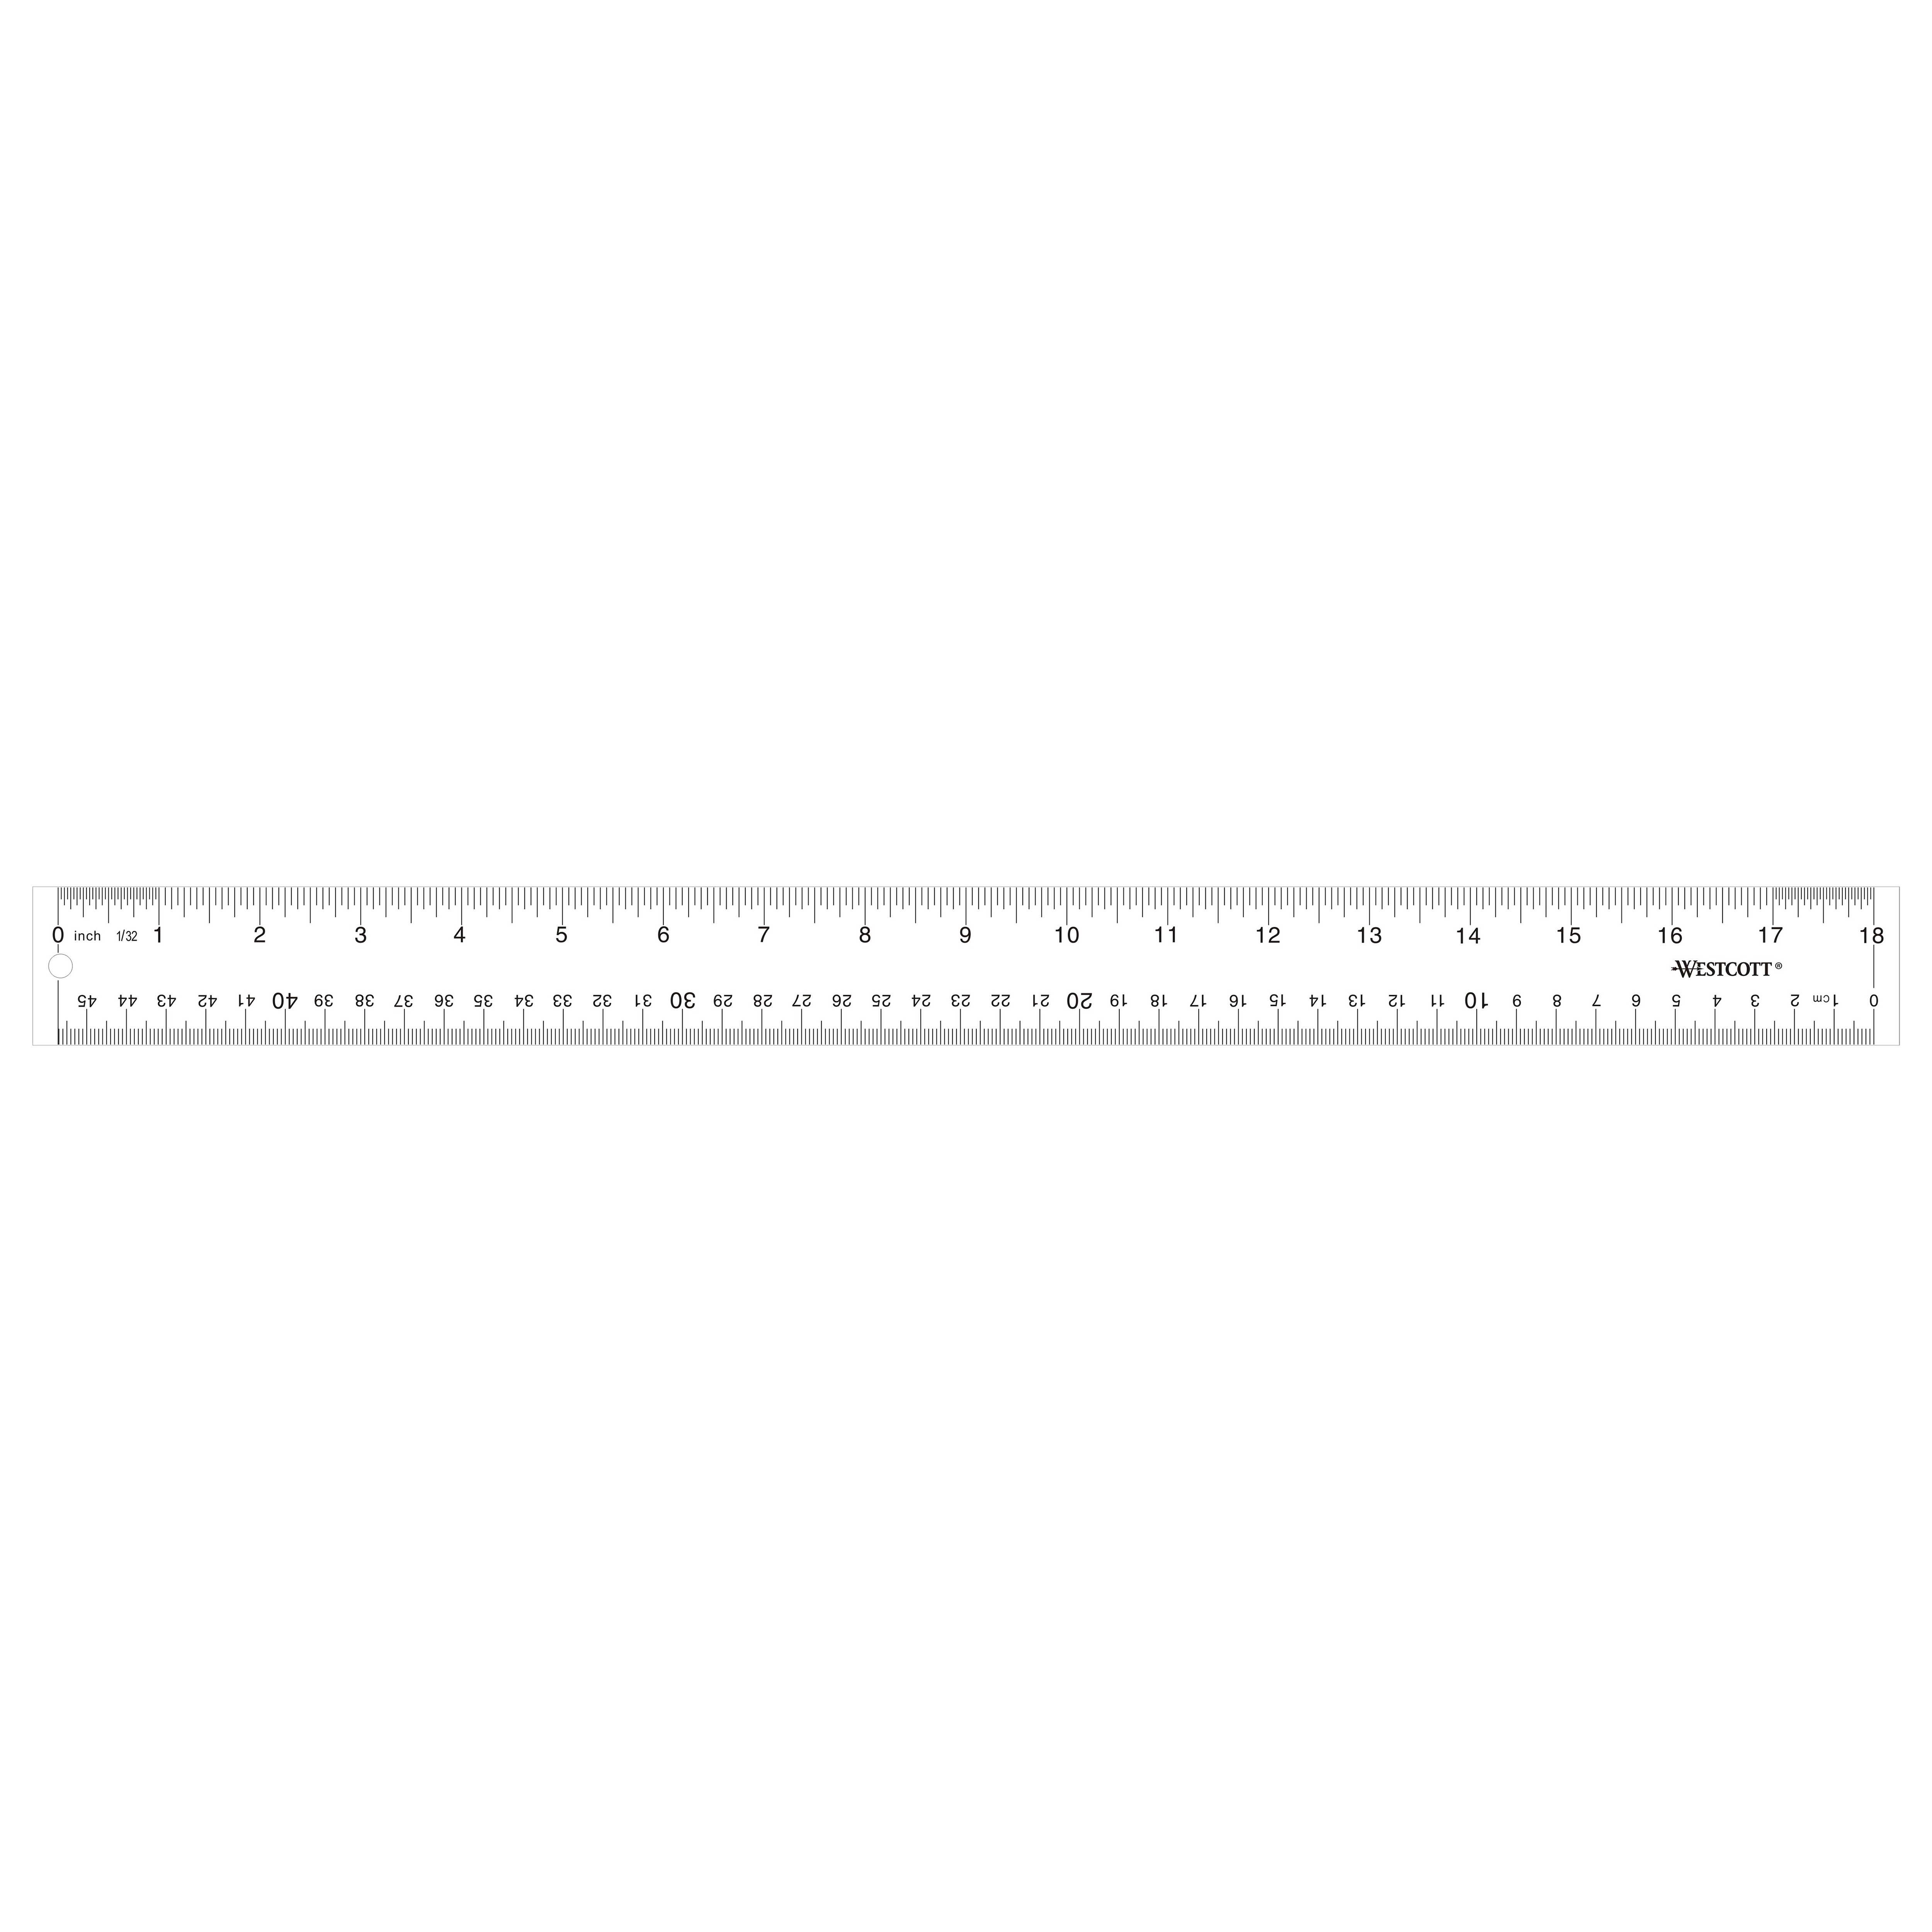 Clear Flexible Acrylic Ruler, Standard/Metric, 18 inch Long, Clear | Bundle of 2 Each